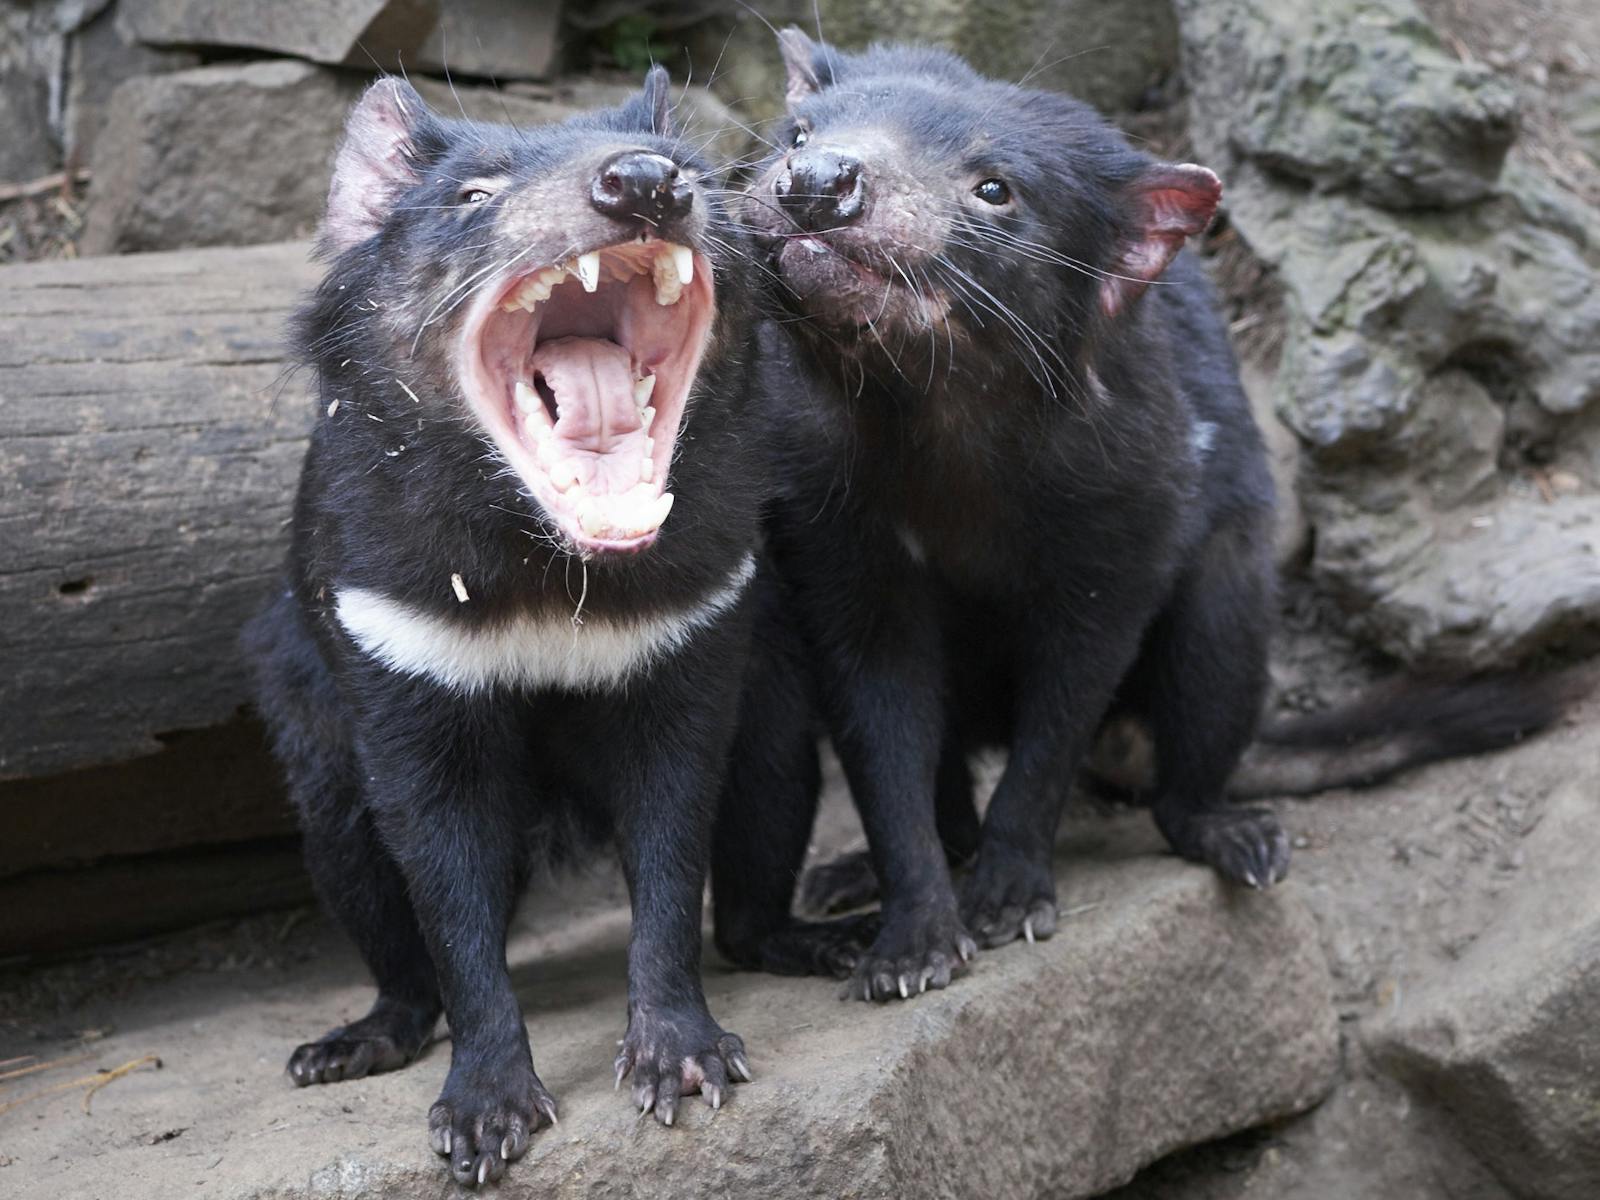 Tasmanian Devil - The Australian Museum